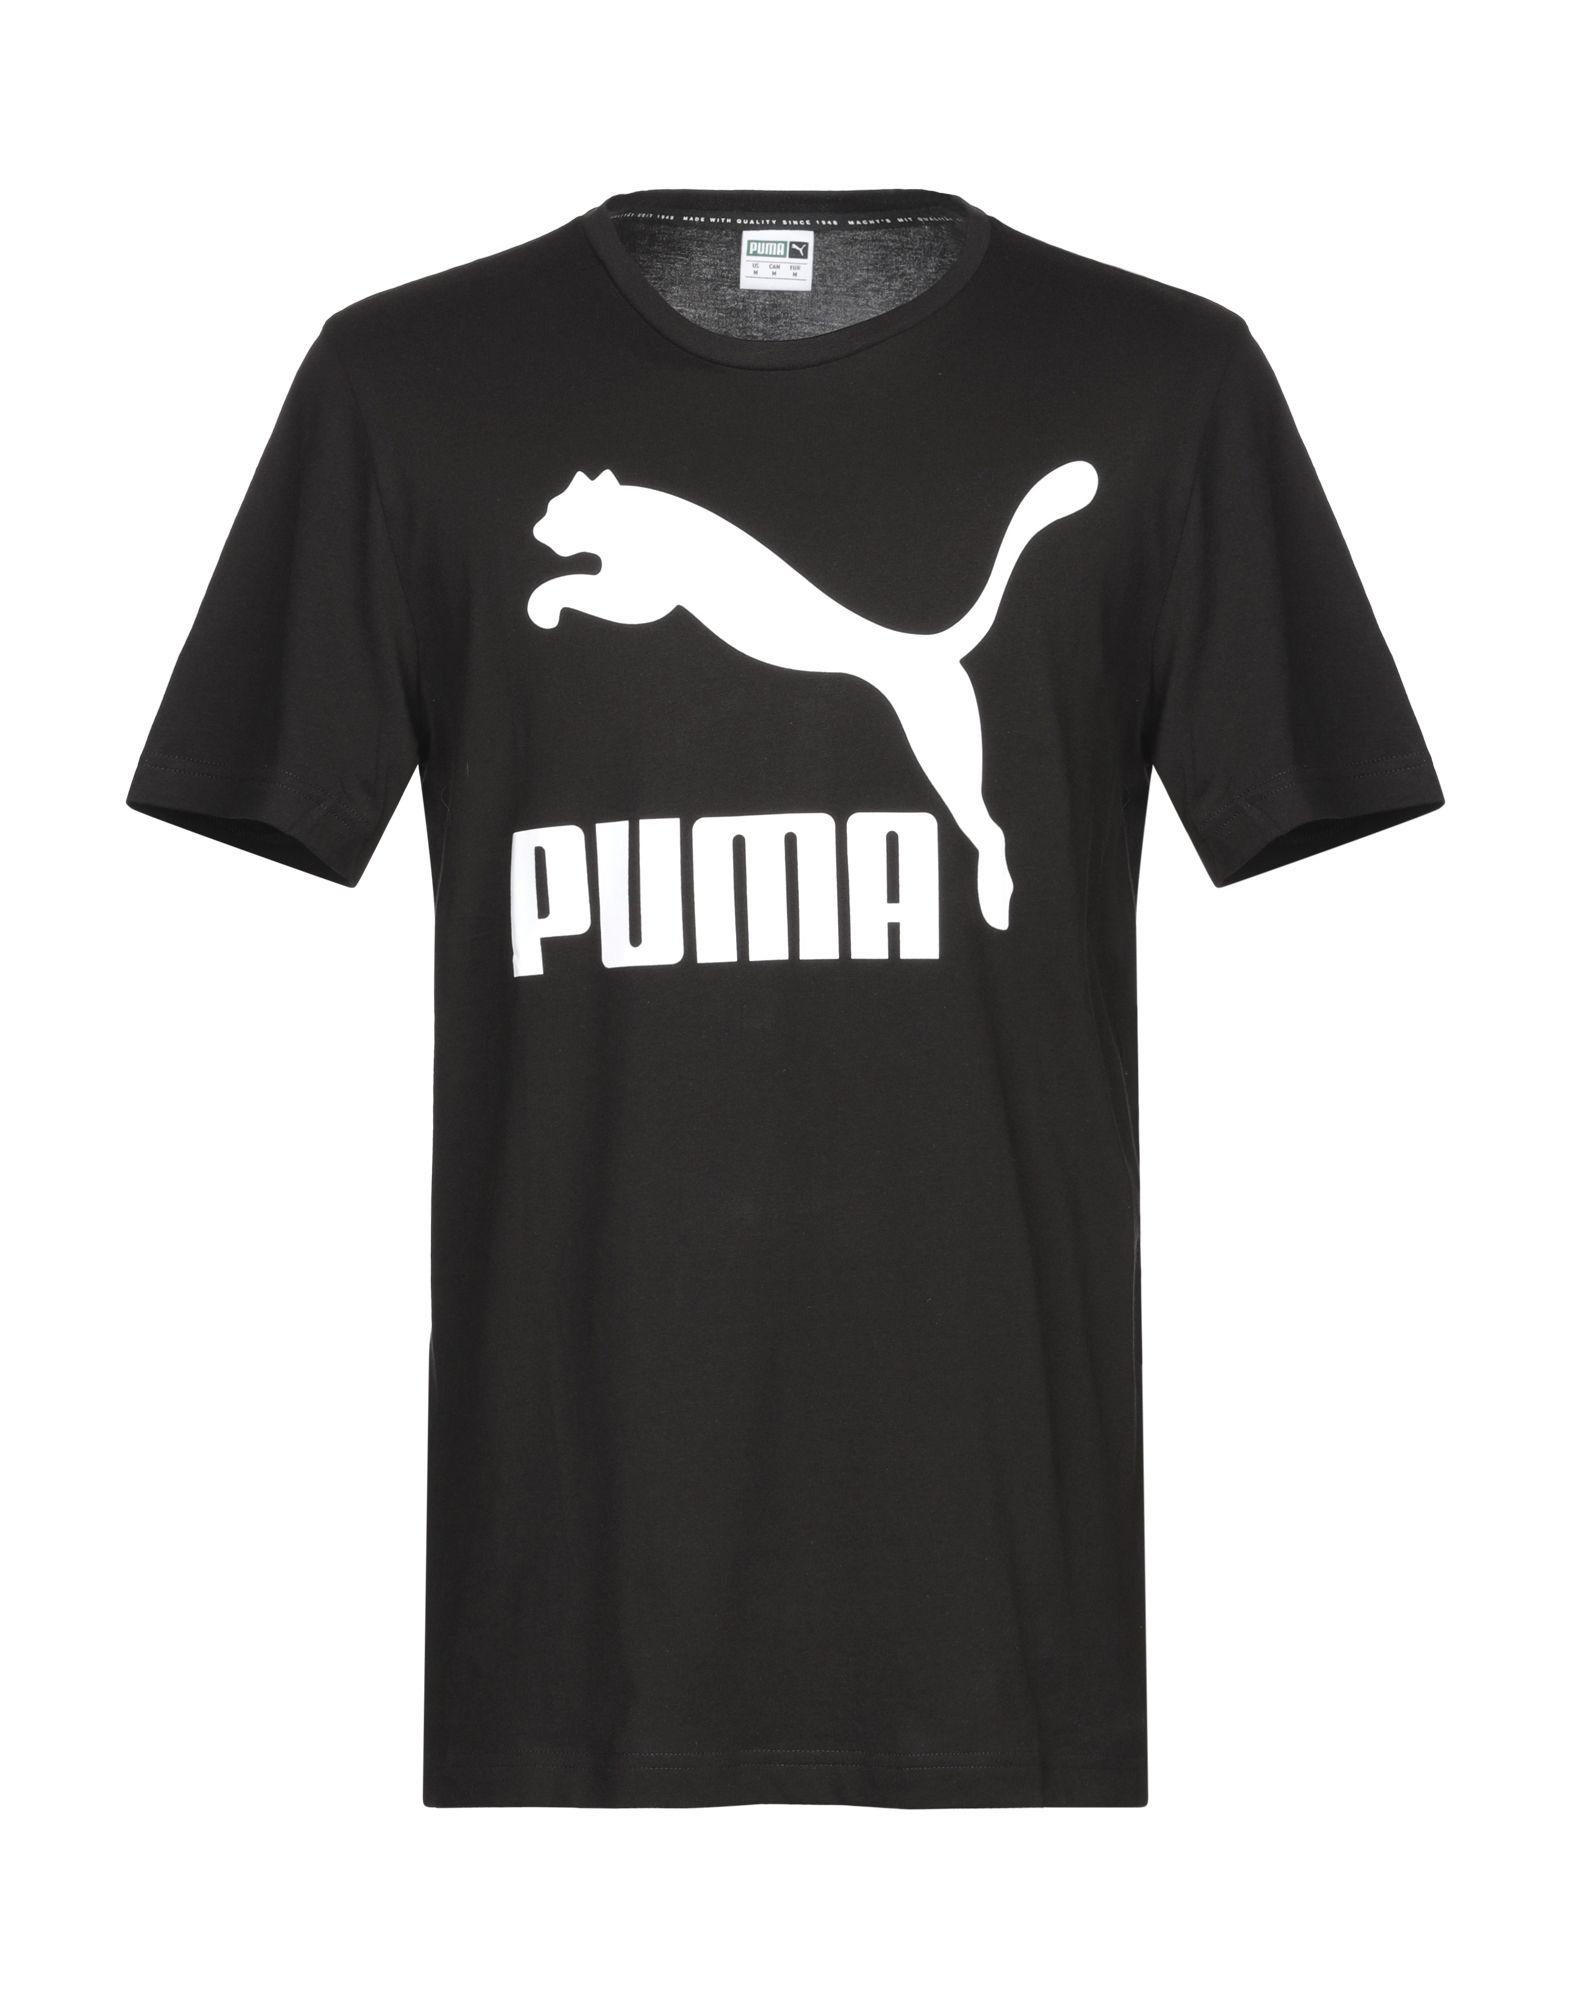 PUMA T-shirt in Black for Men - Lyst